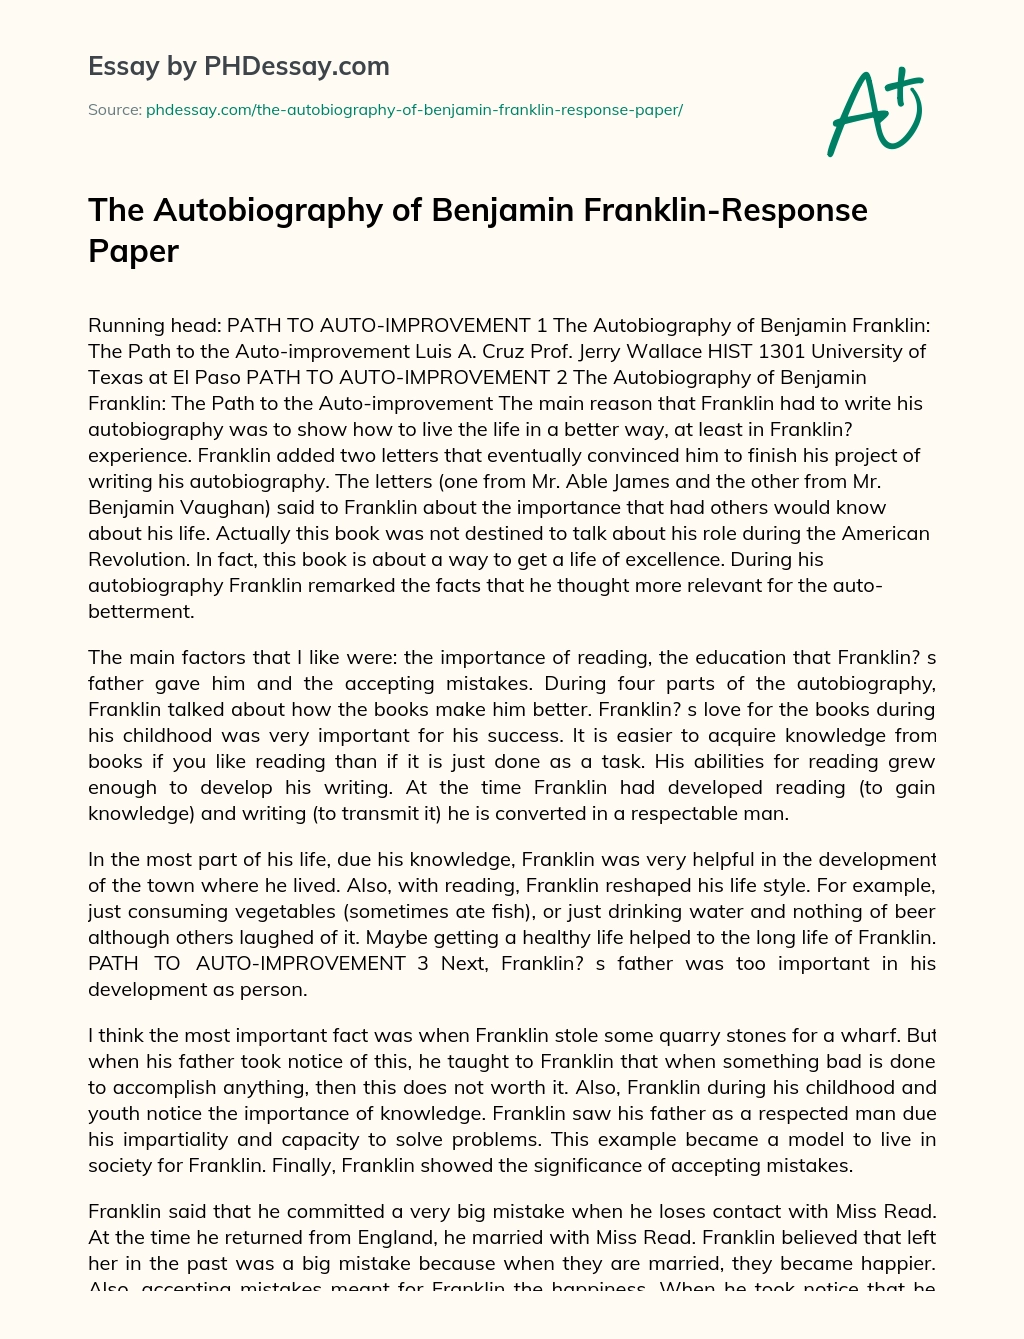 The Autobiography of Benjamin Franklin-Response Paper essay